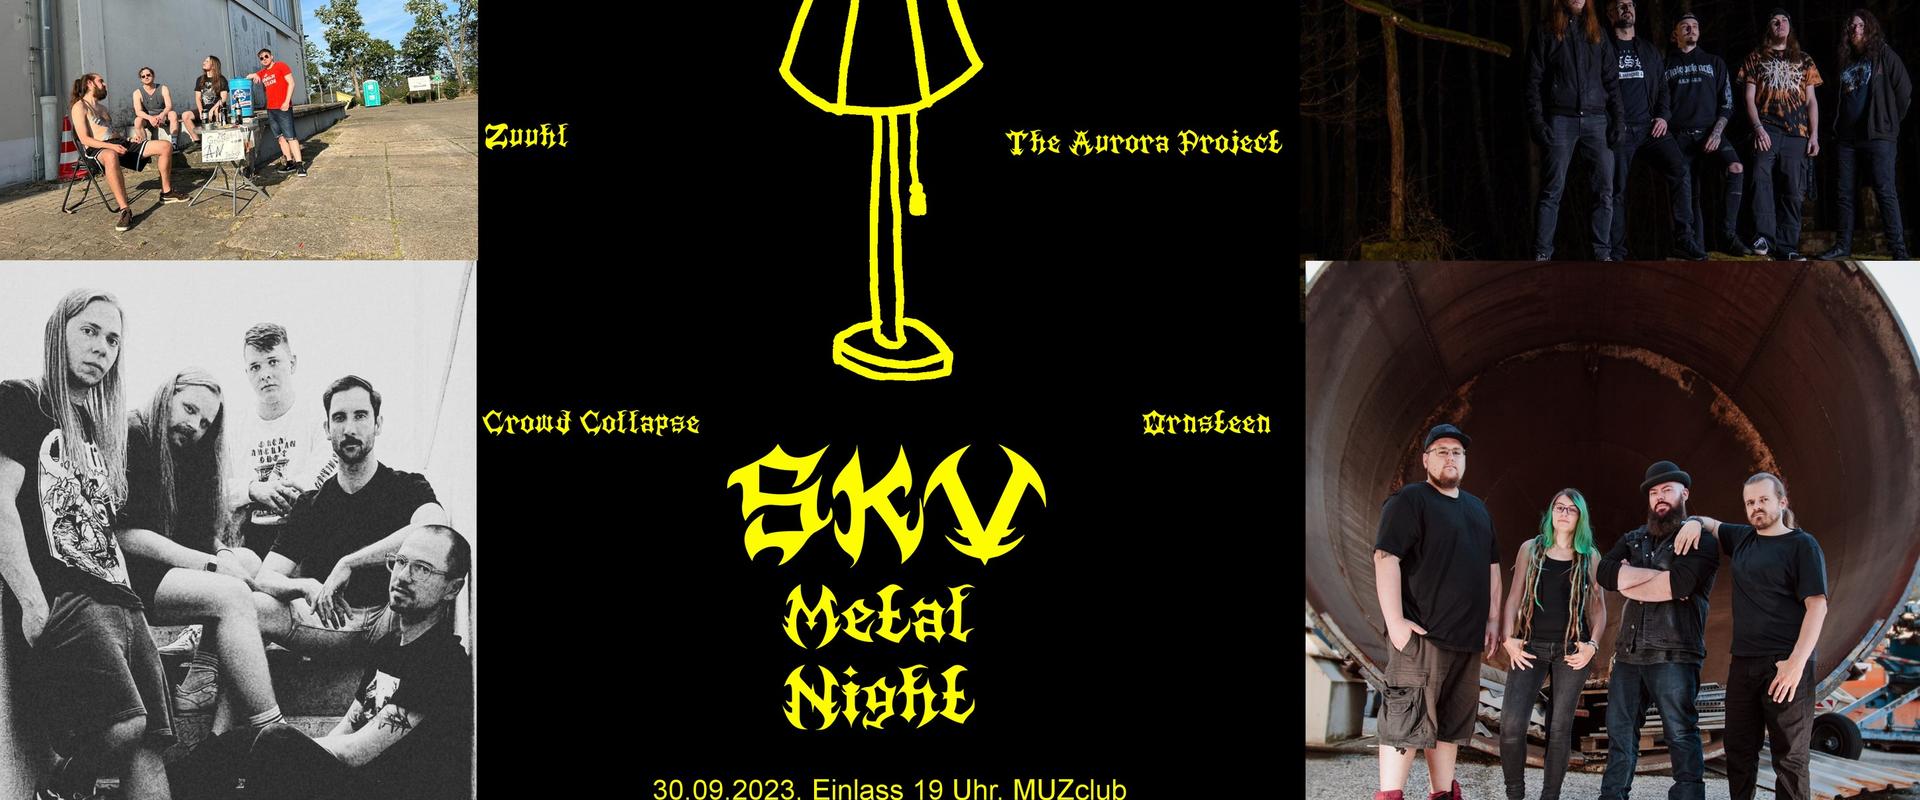 SKV Metal Night im MUZclub